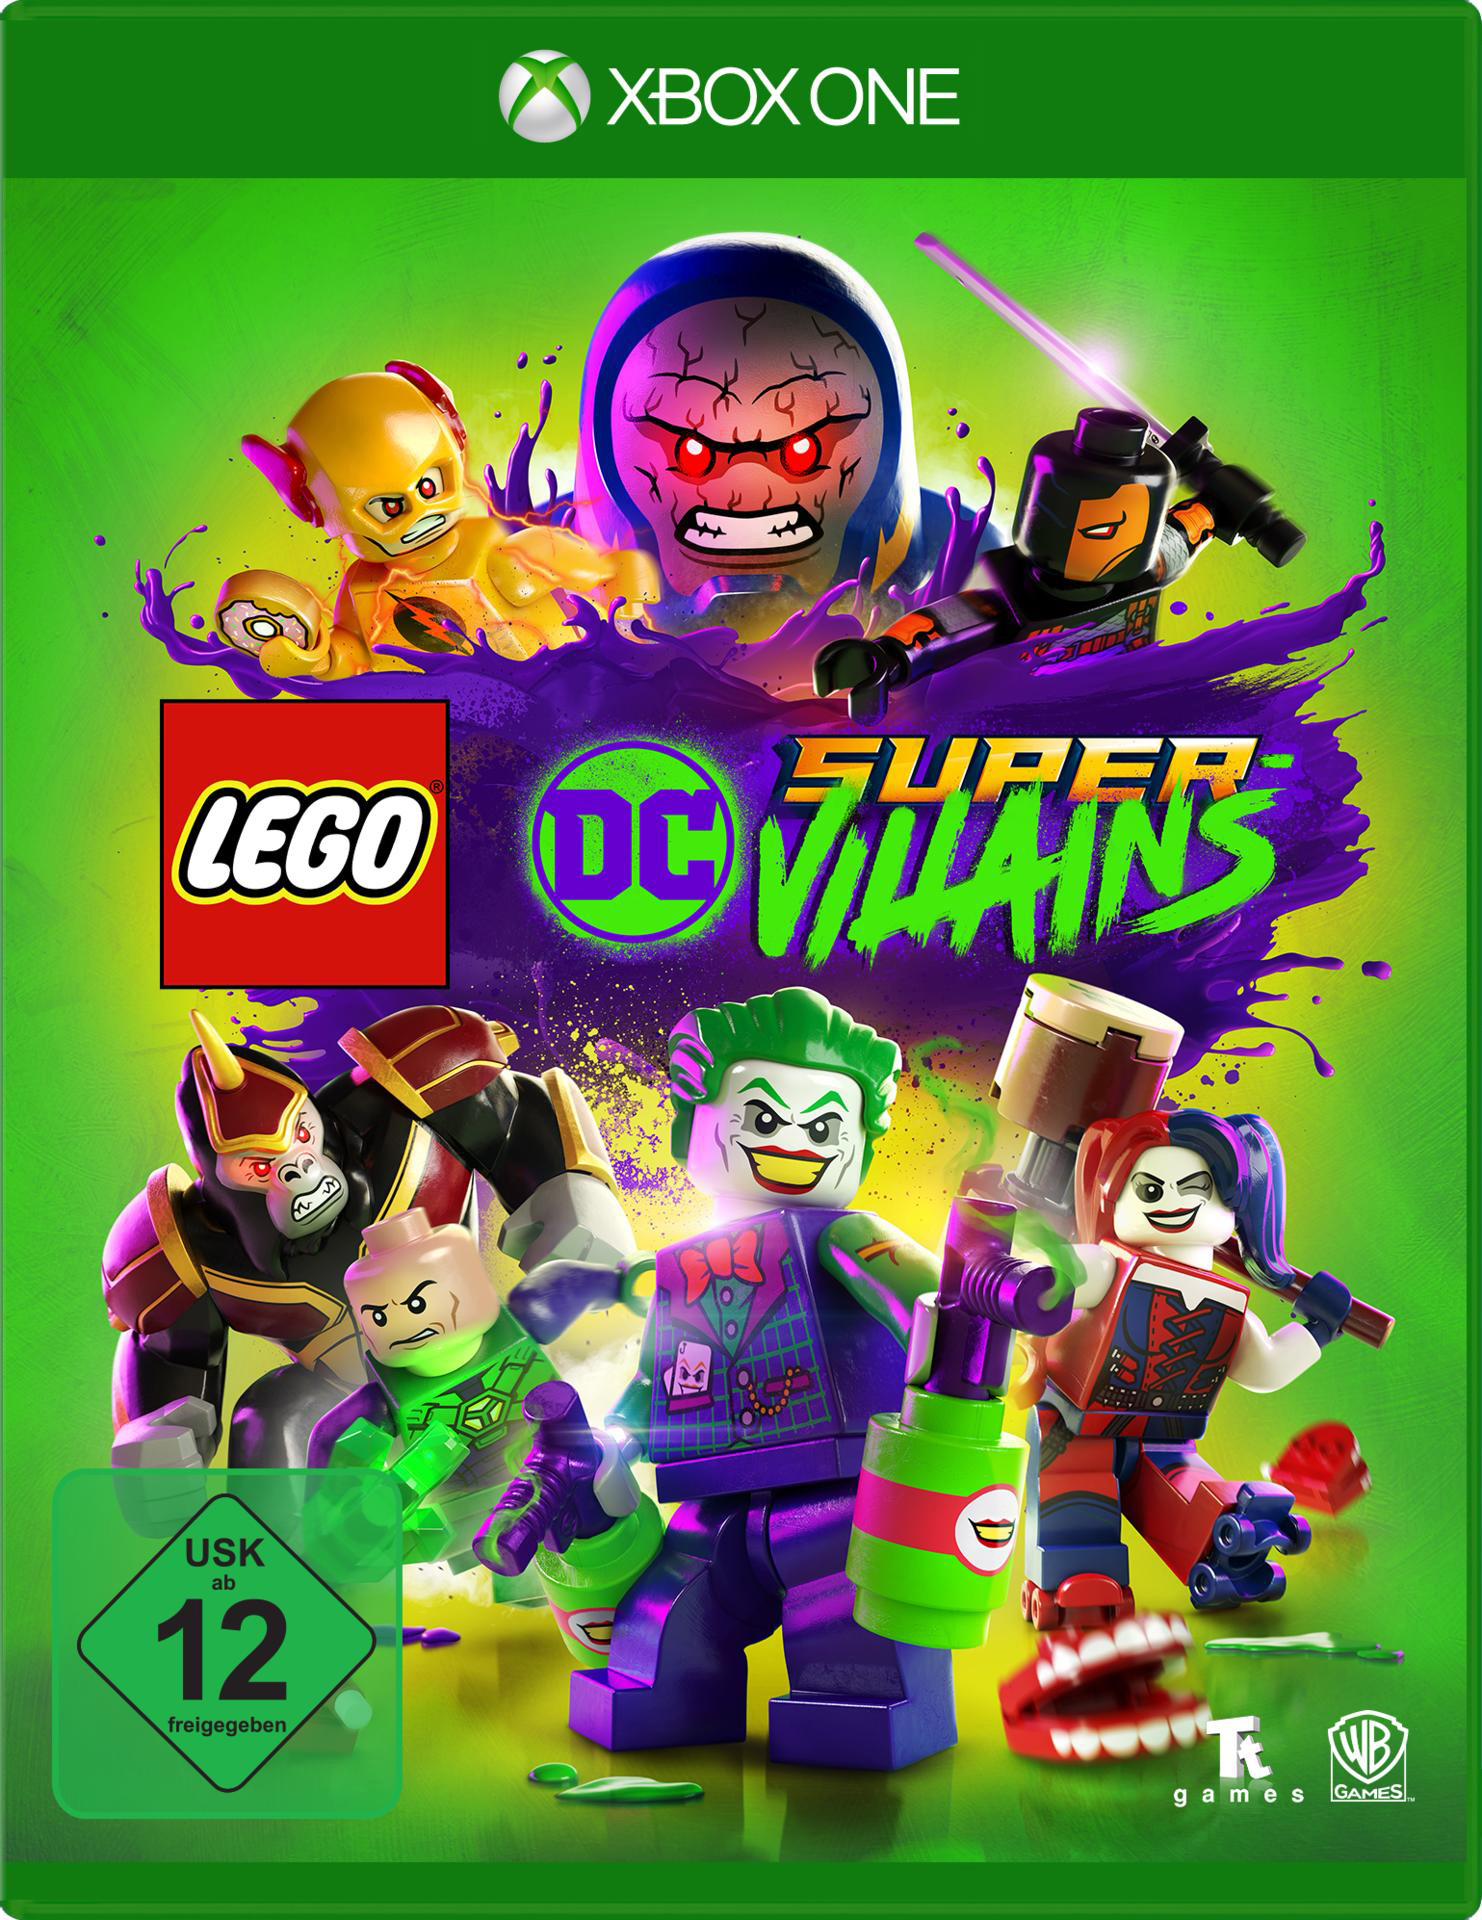 LEGO DC One] - Supervillains [Xbox